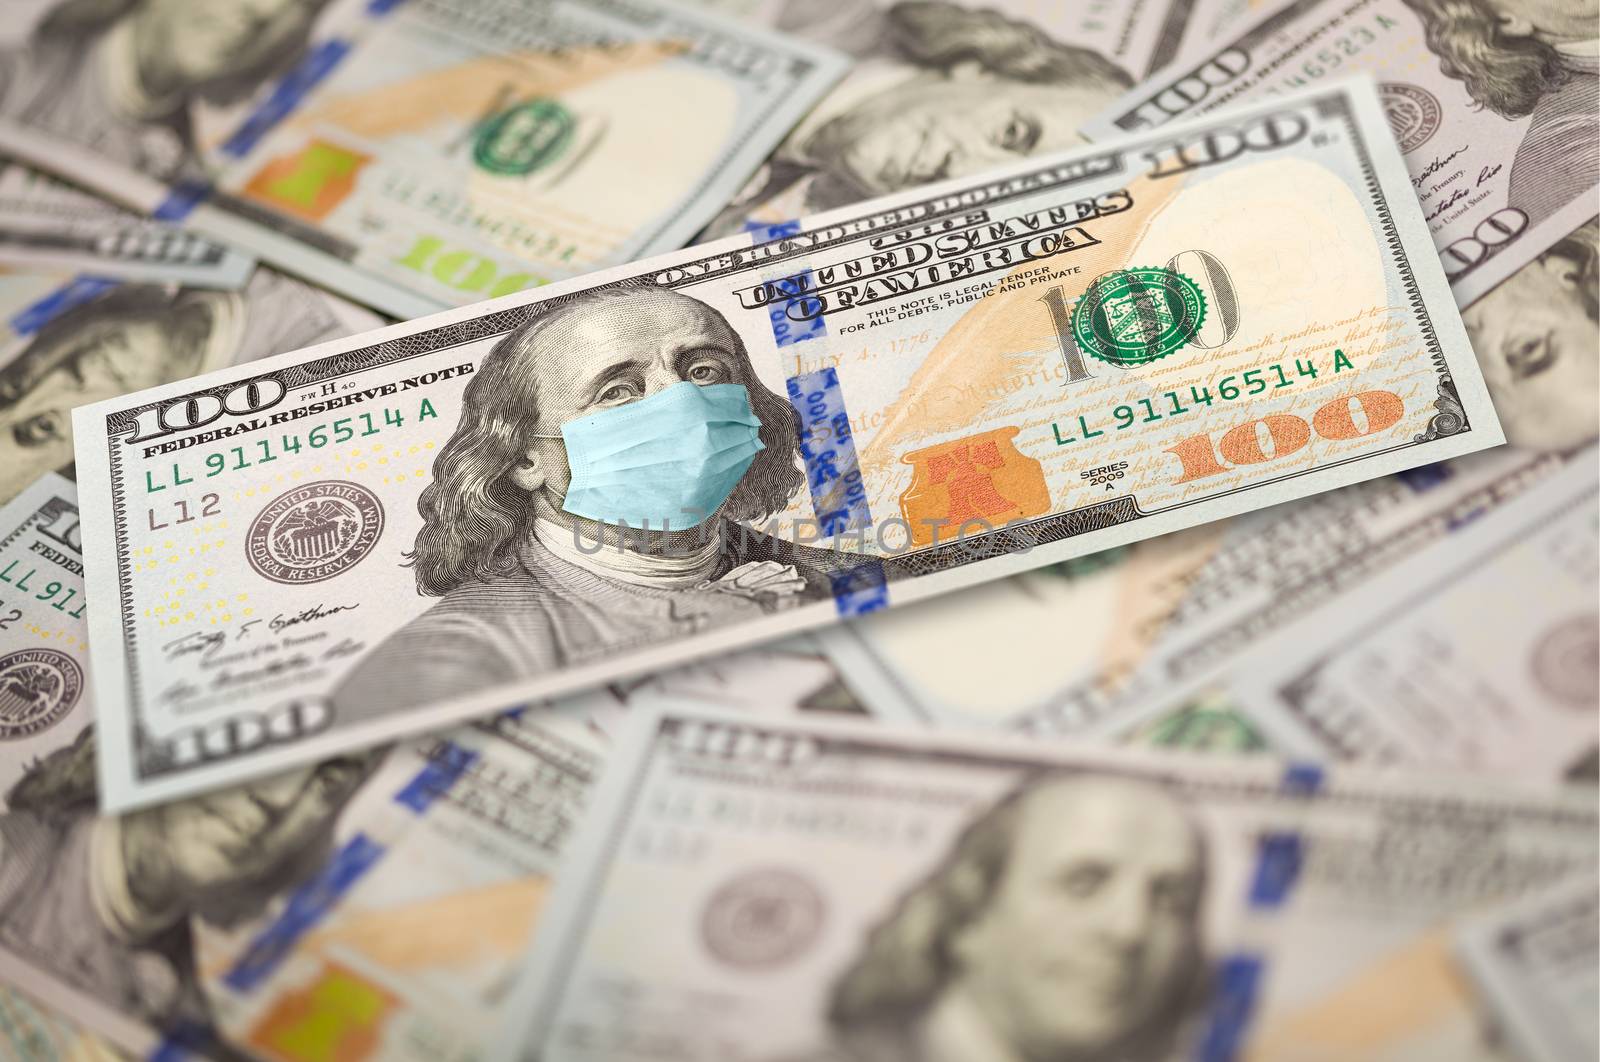 Pile of One Hundred Dollar Bills With Medical Face Mask on Face of Benjamin Franklin.